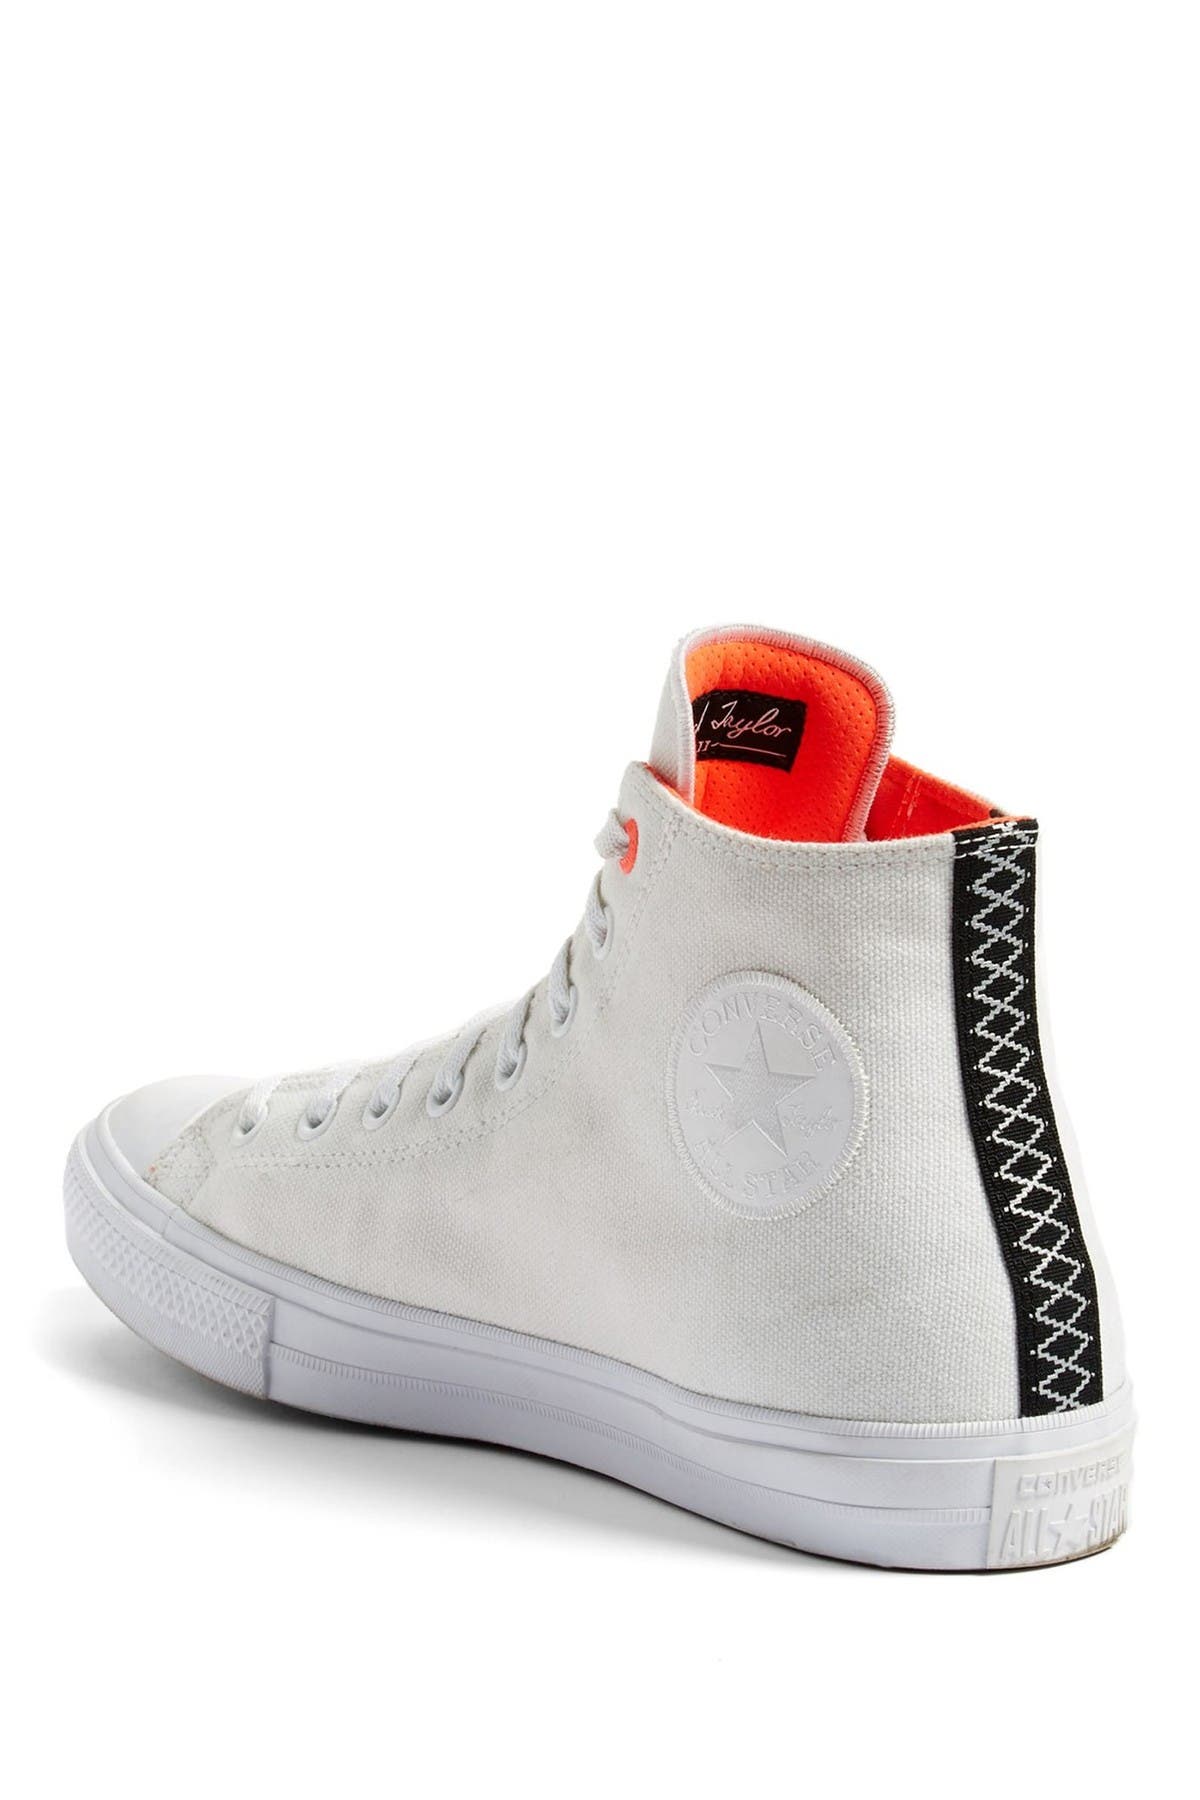 Converse | Chuck Taylor All Star II SHield Water Repellent High Top Sneaker  | HauteLook